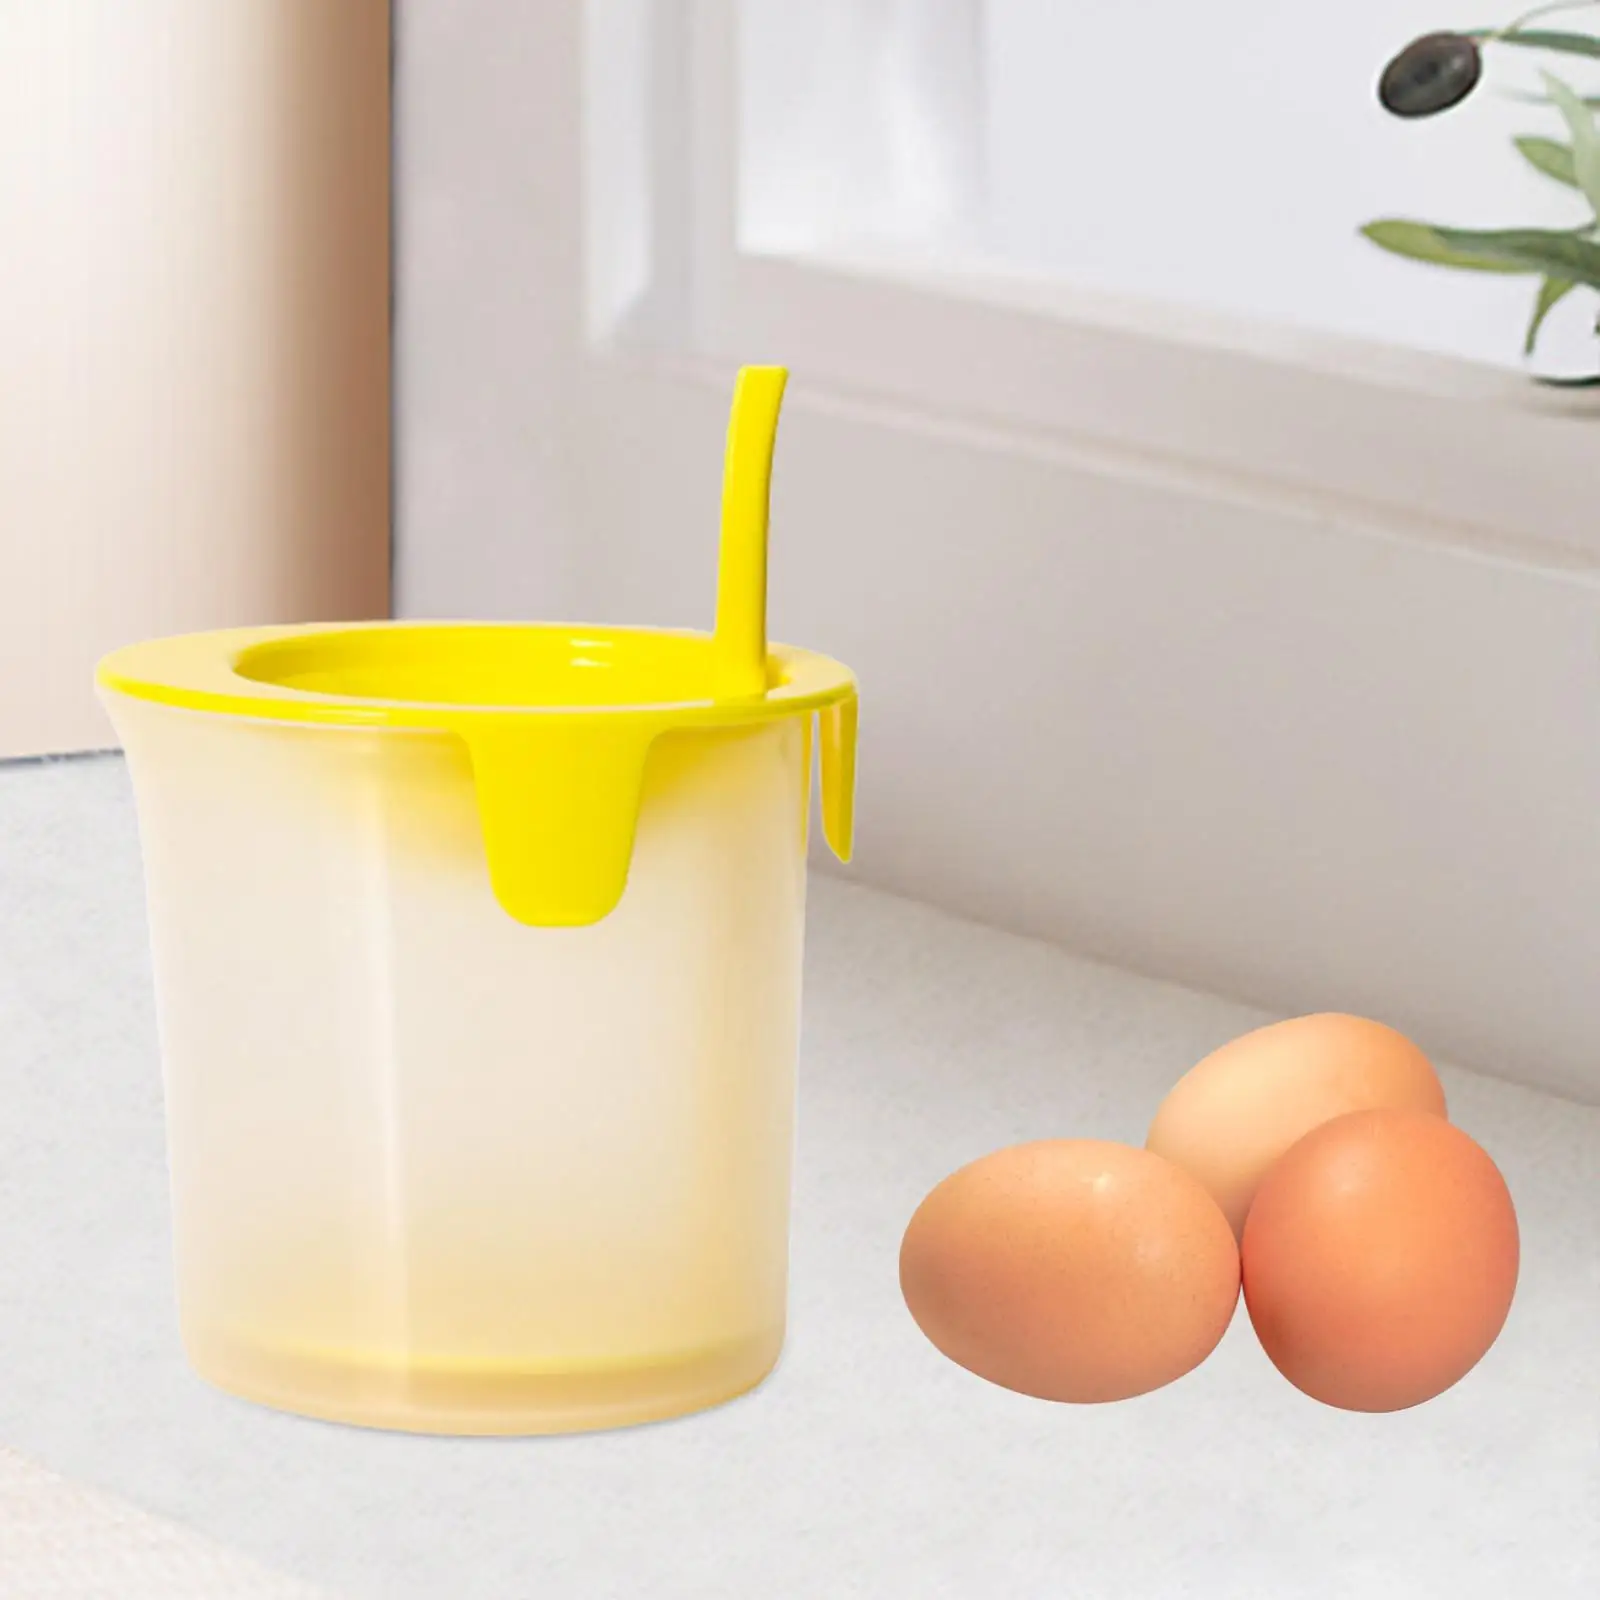 Egg Whites and Yolks Separator Egg Divider Tool Cooking Gadgets Egg White Beating Bowl for Kitchen Baking Dining